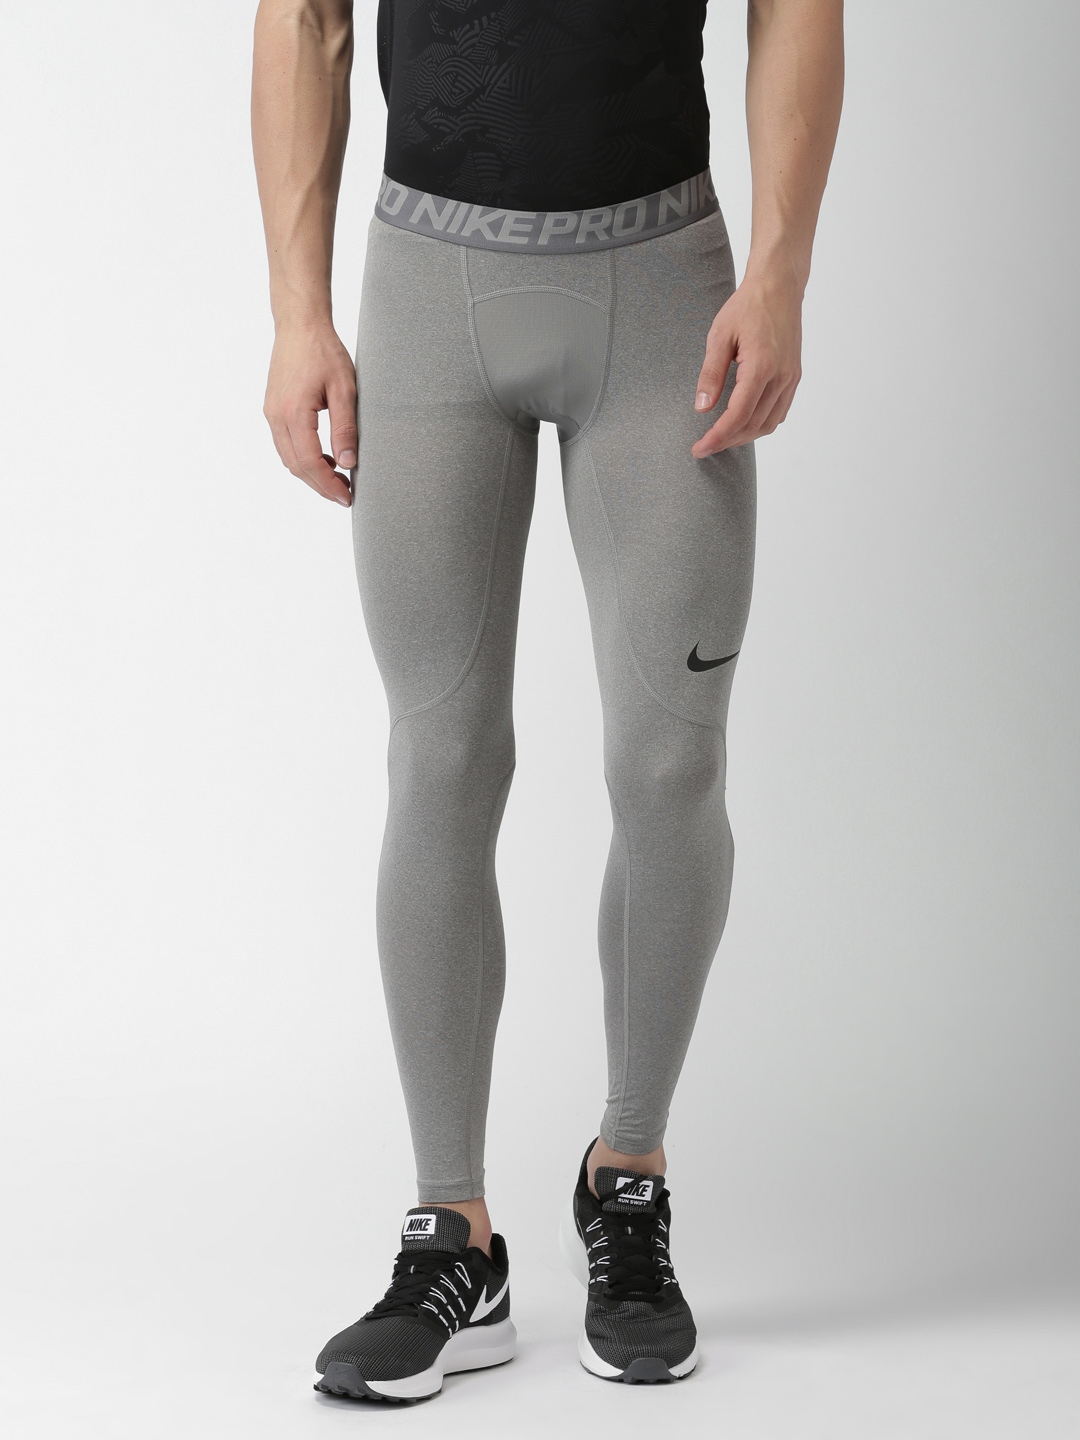 Nike Mens Running Tights Black S  Amazonin Clothing  Accessories